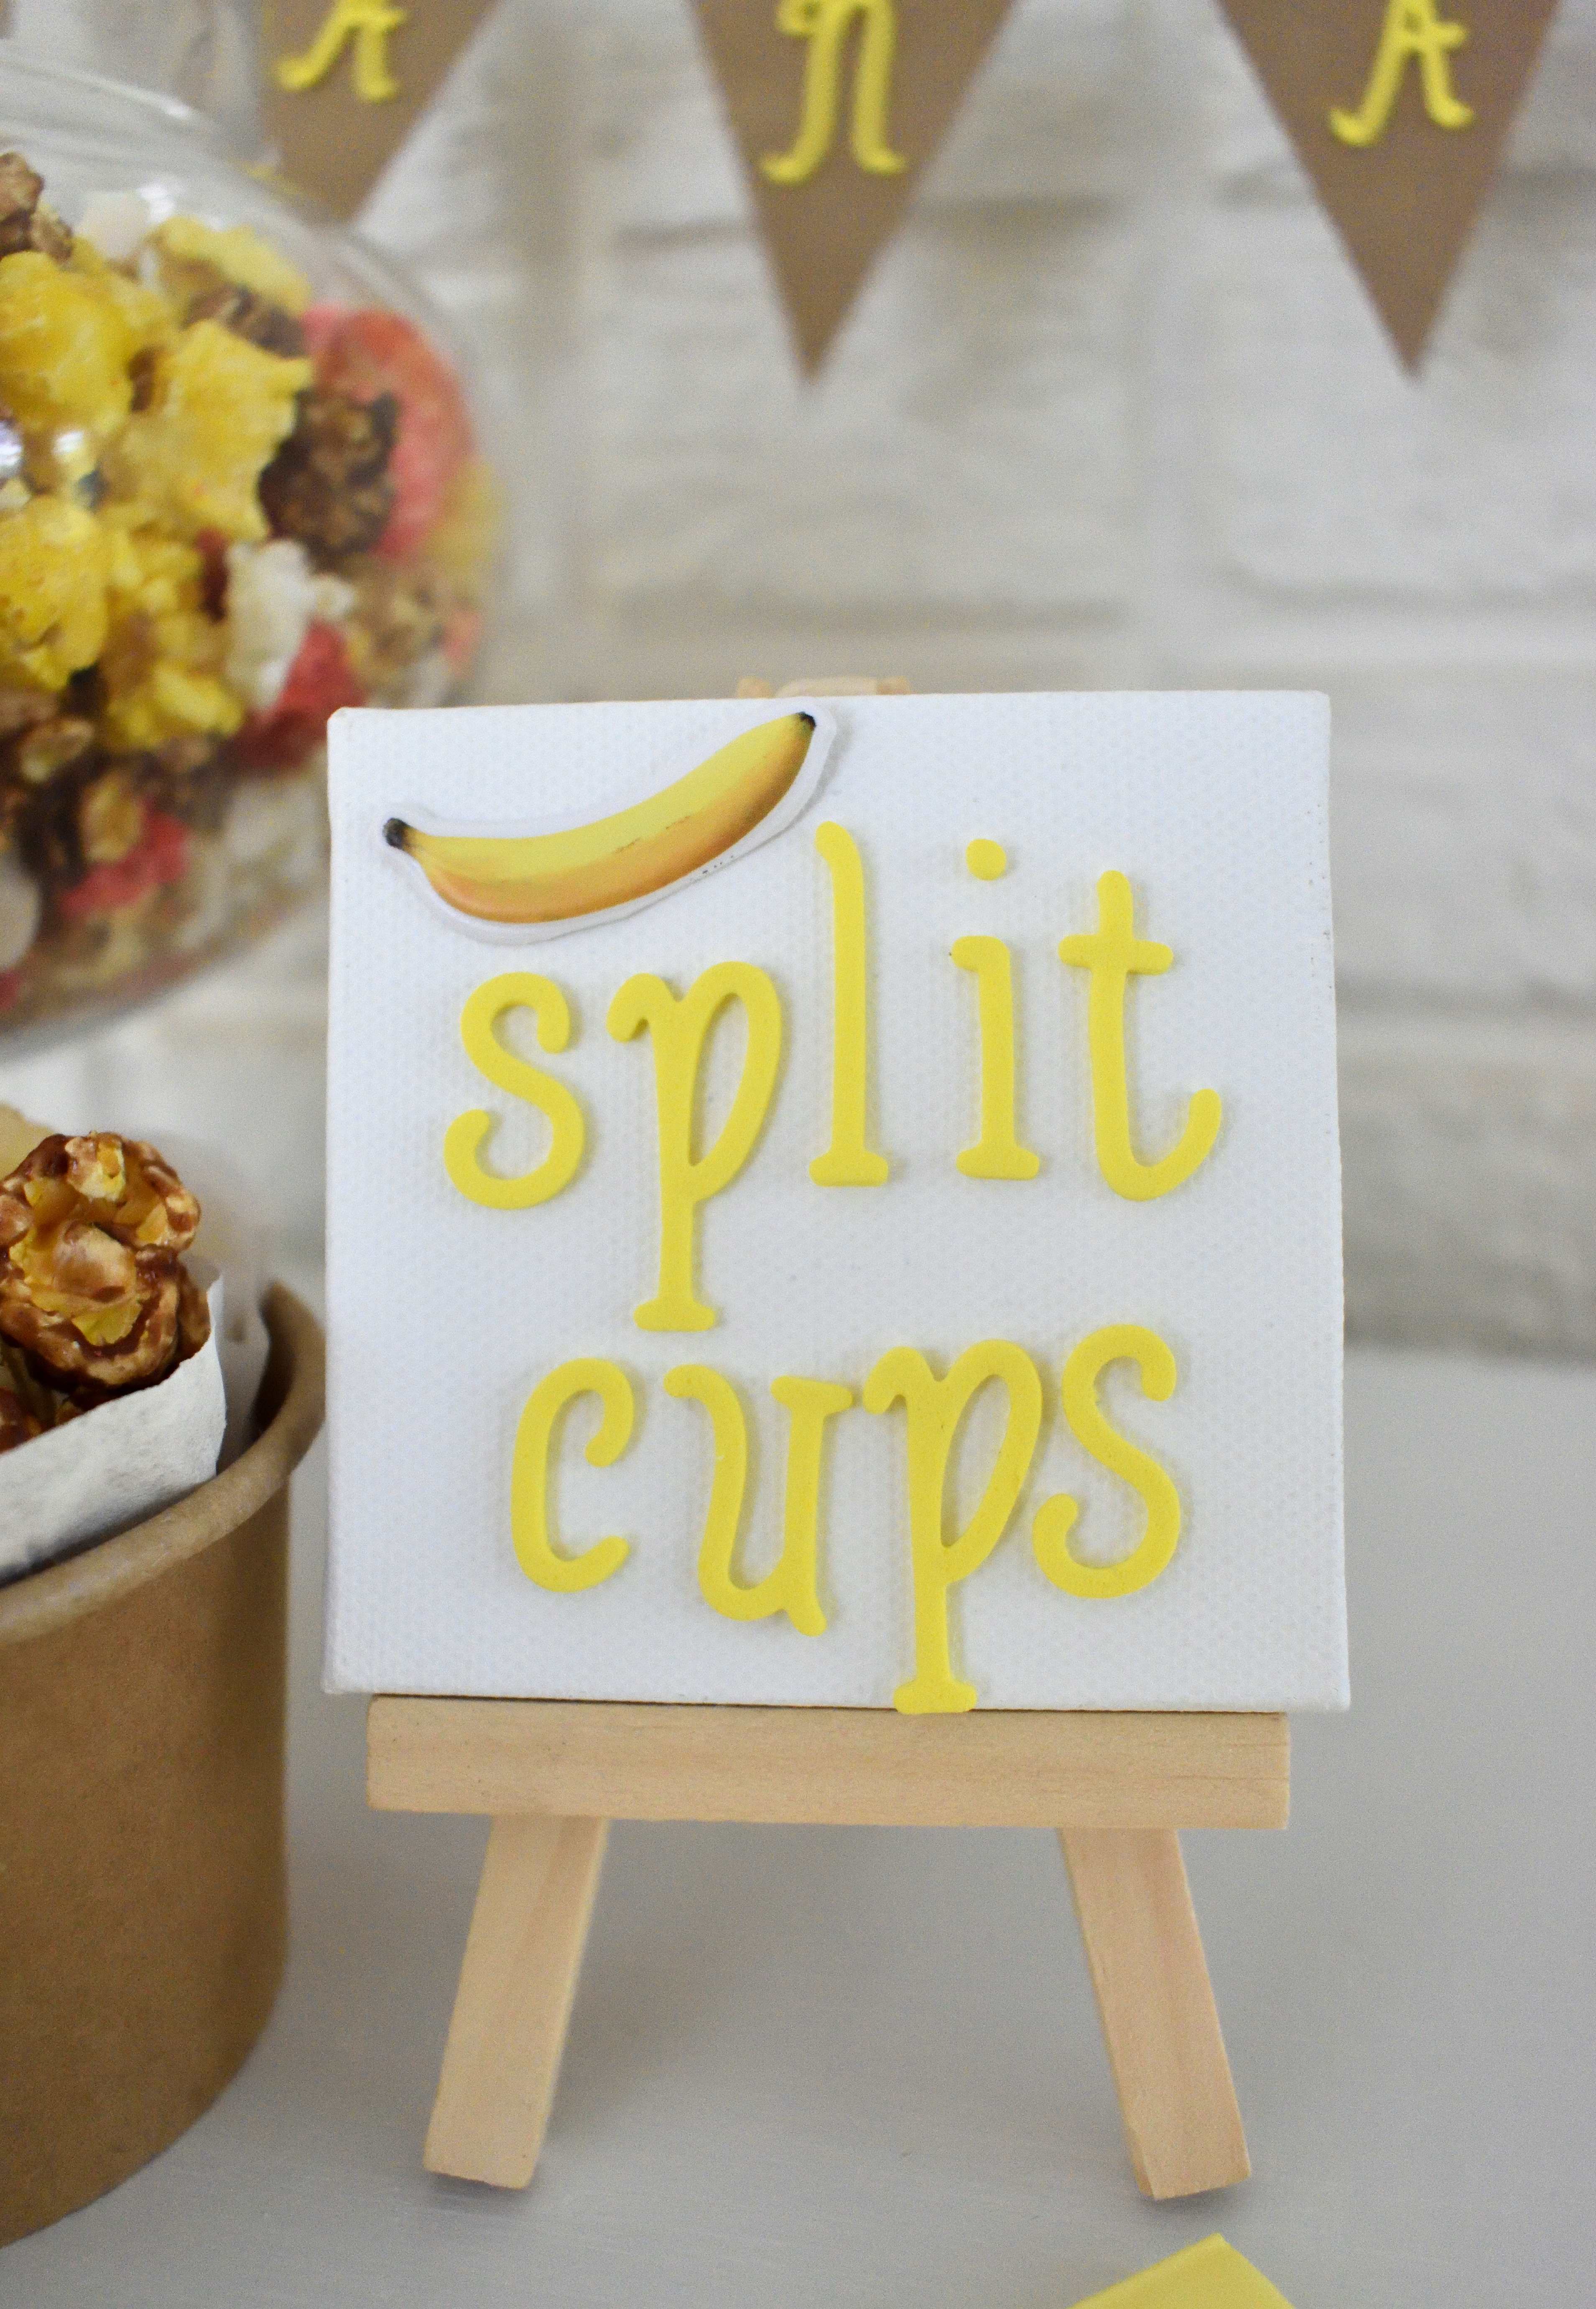 banana split ideas